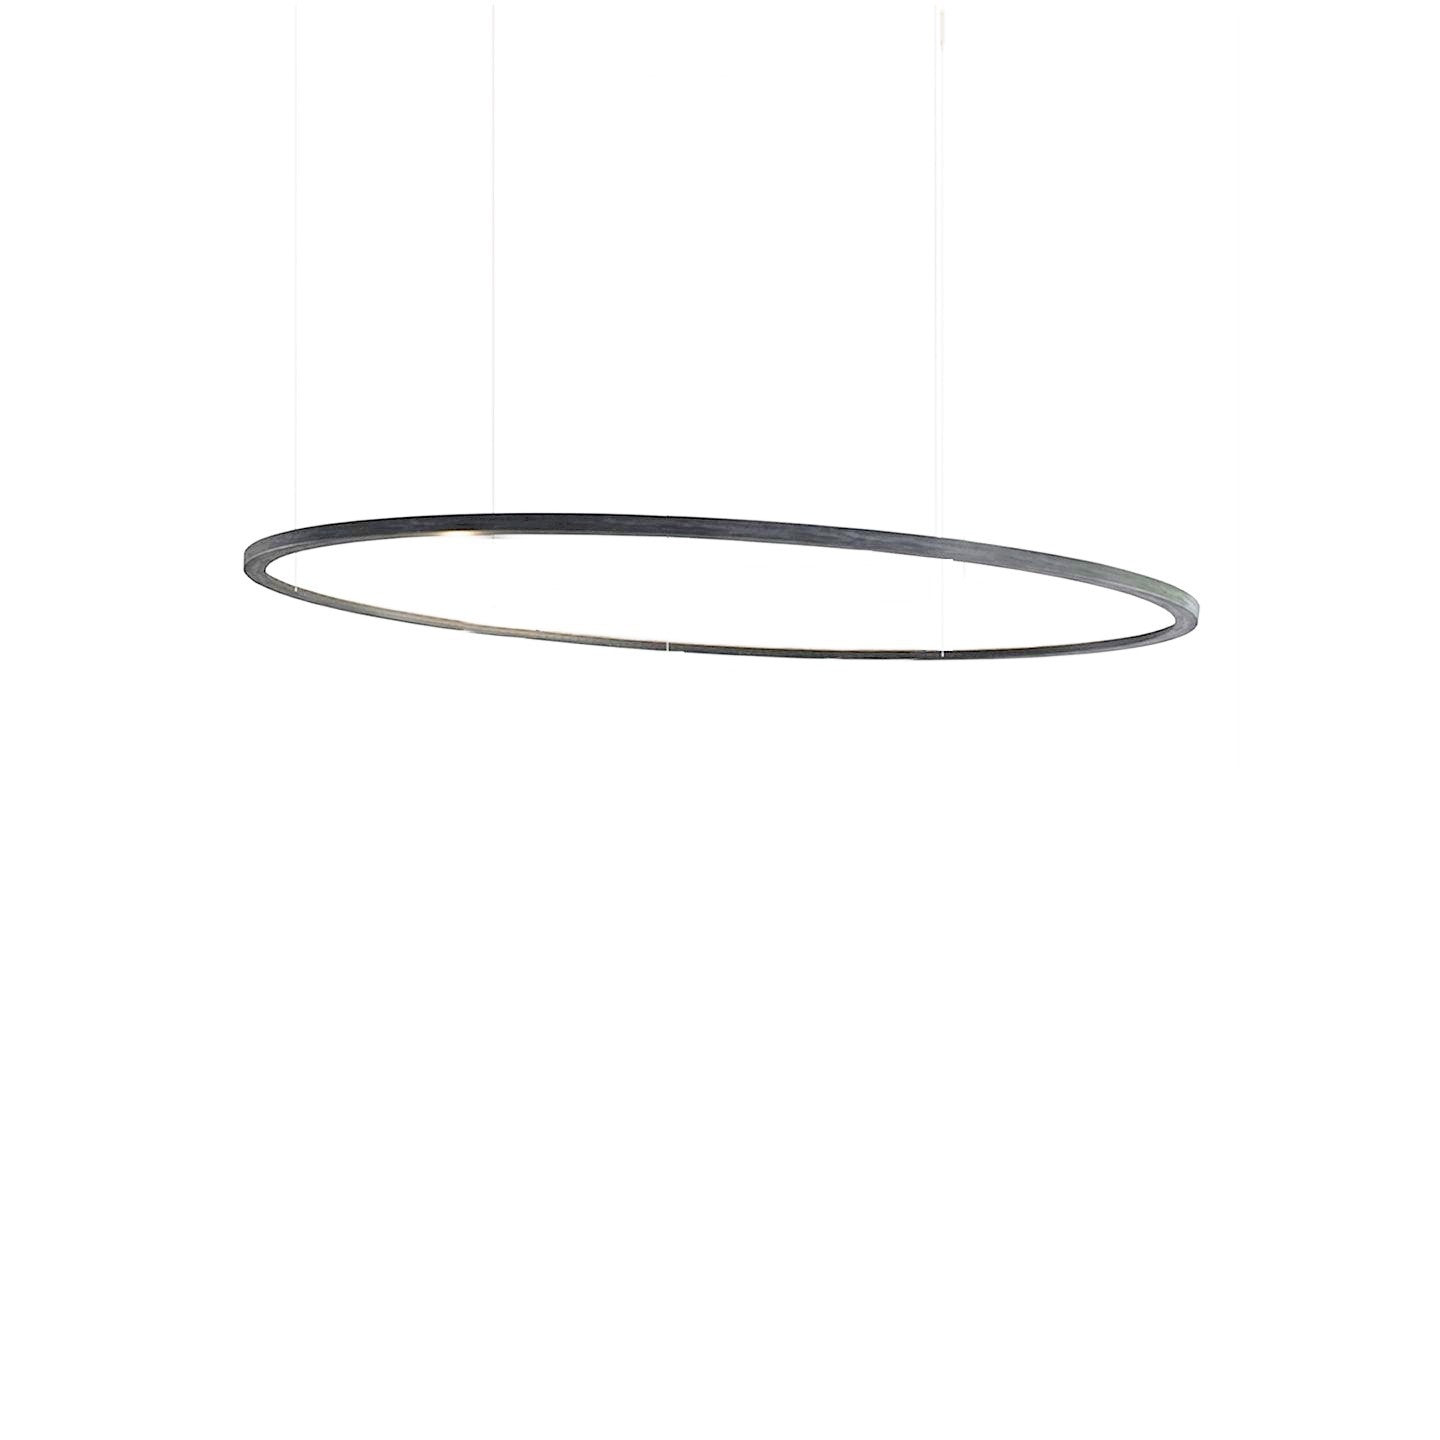 Jacco Maris - Framed hanglamp cirkel 135cm